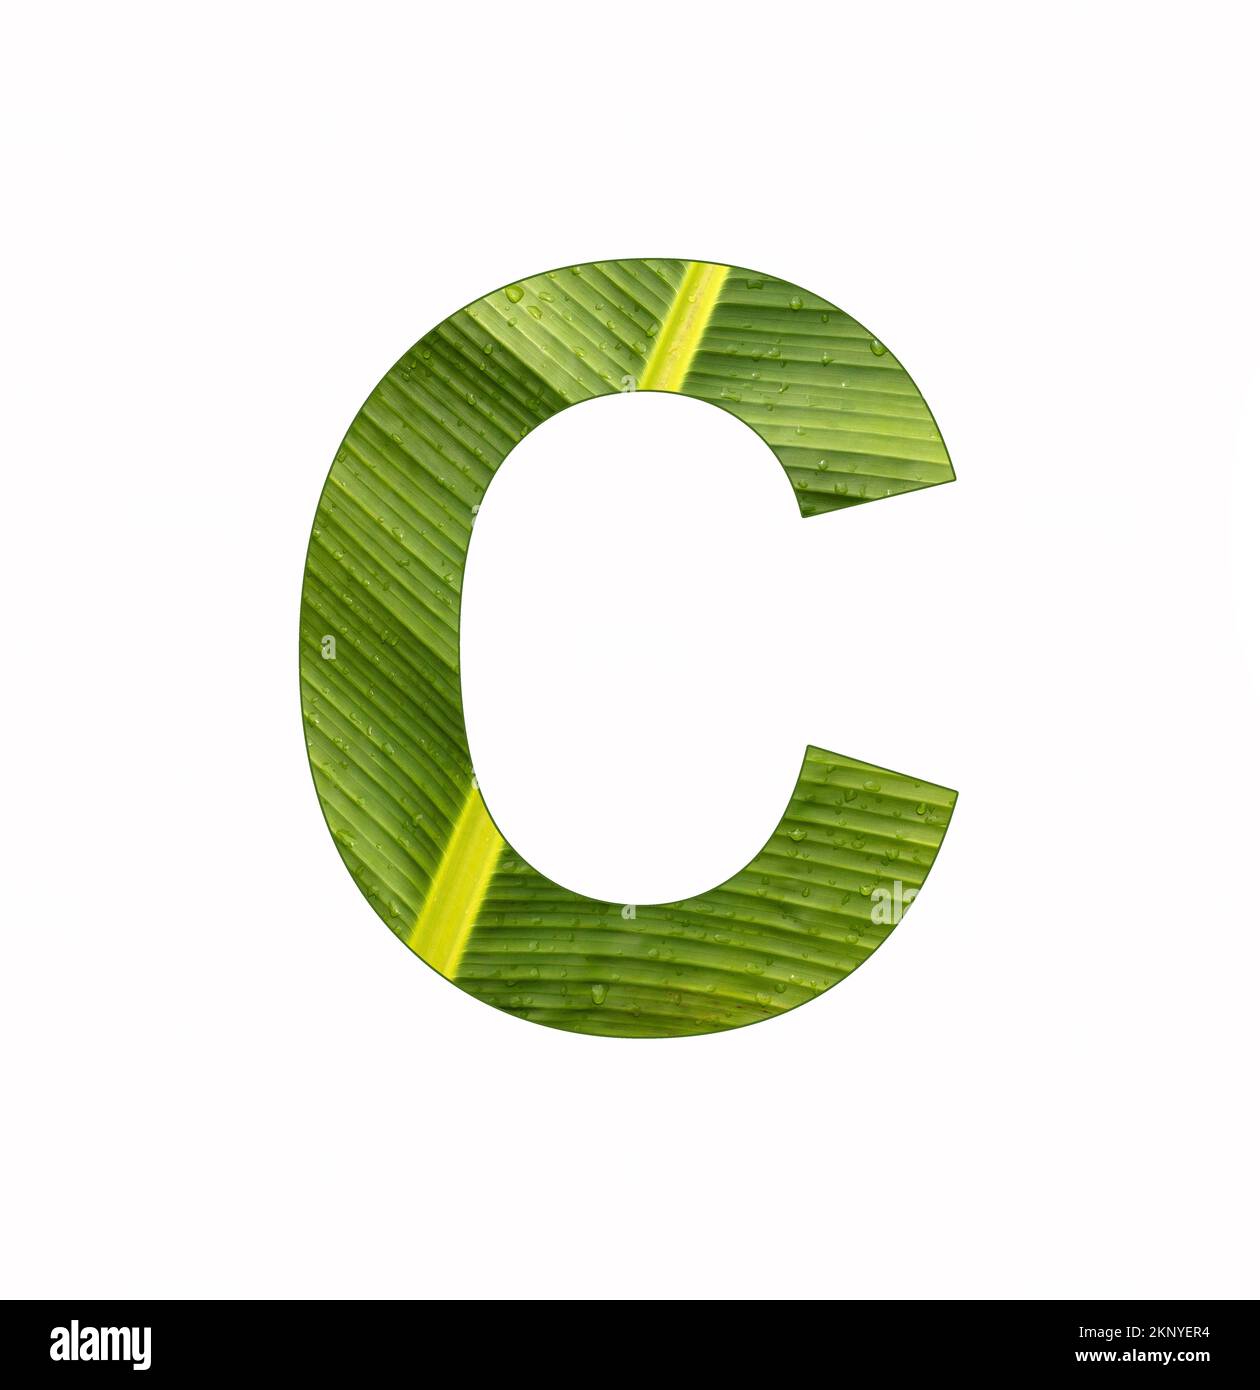 Alphabet Letter C - Banana plant leaf background Stock Photo